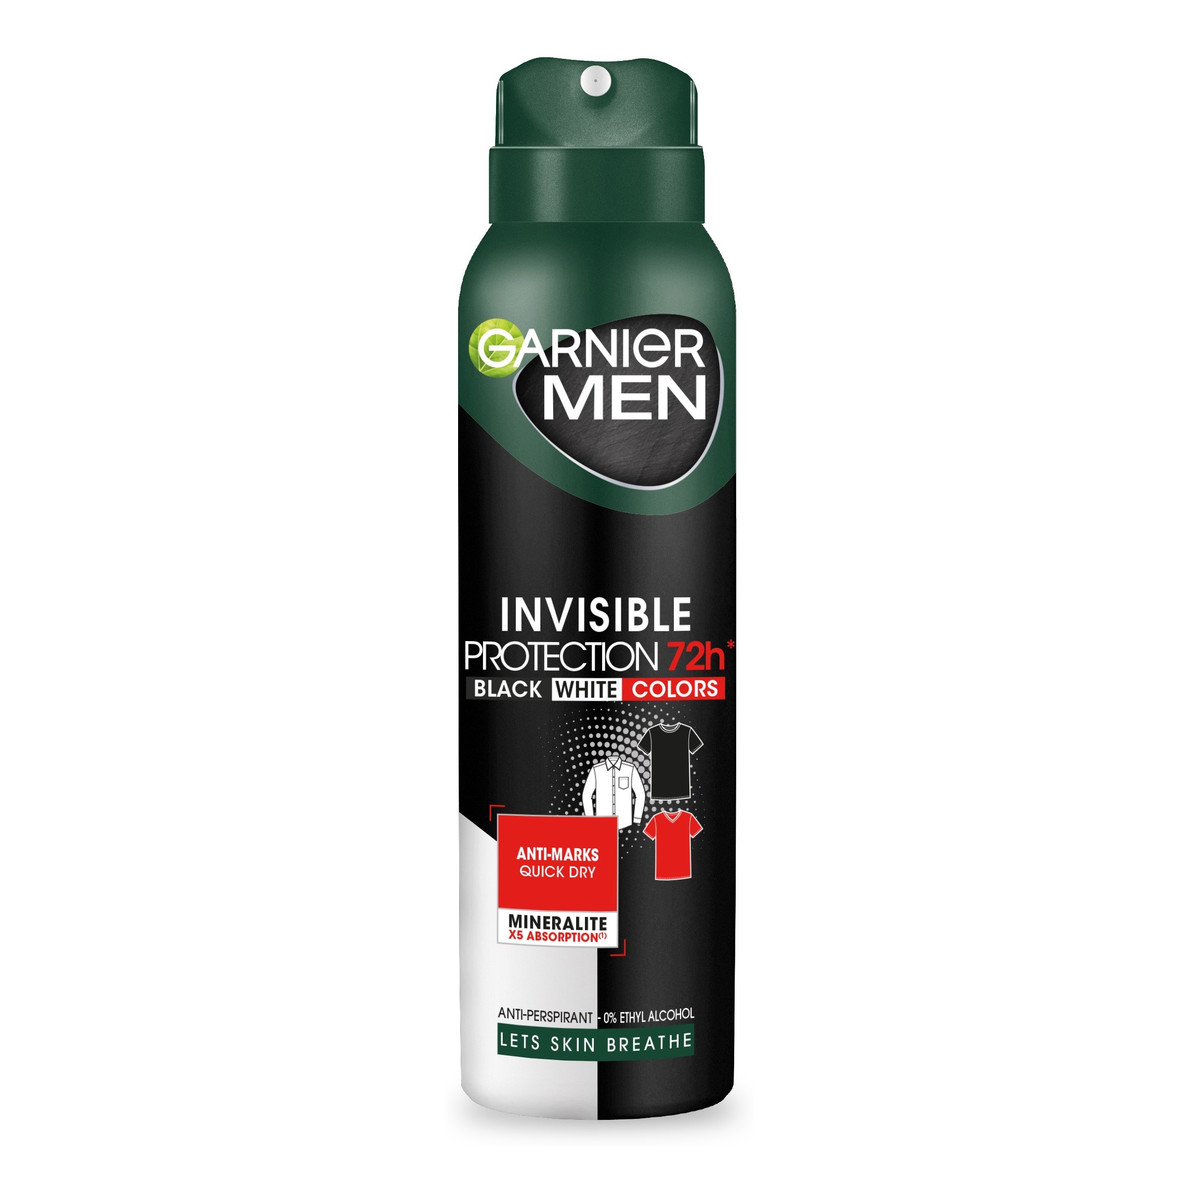 Garnier Men Dezodorant spray Invisible Protection 72h Black White Colors 150ml